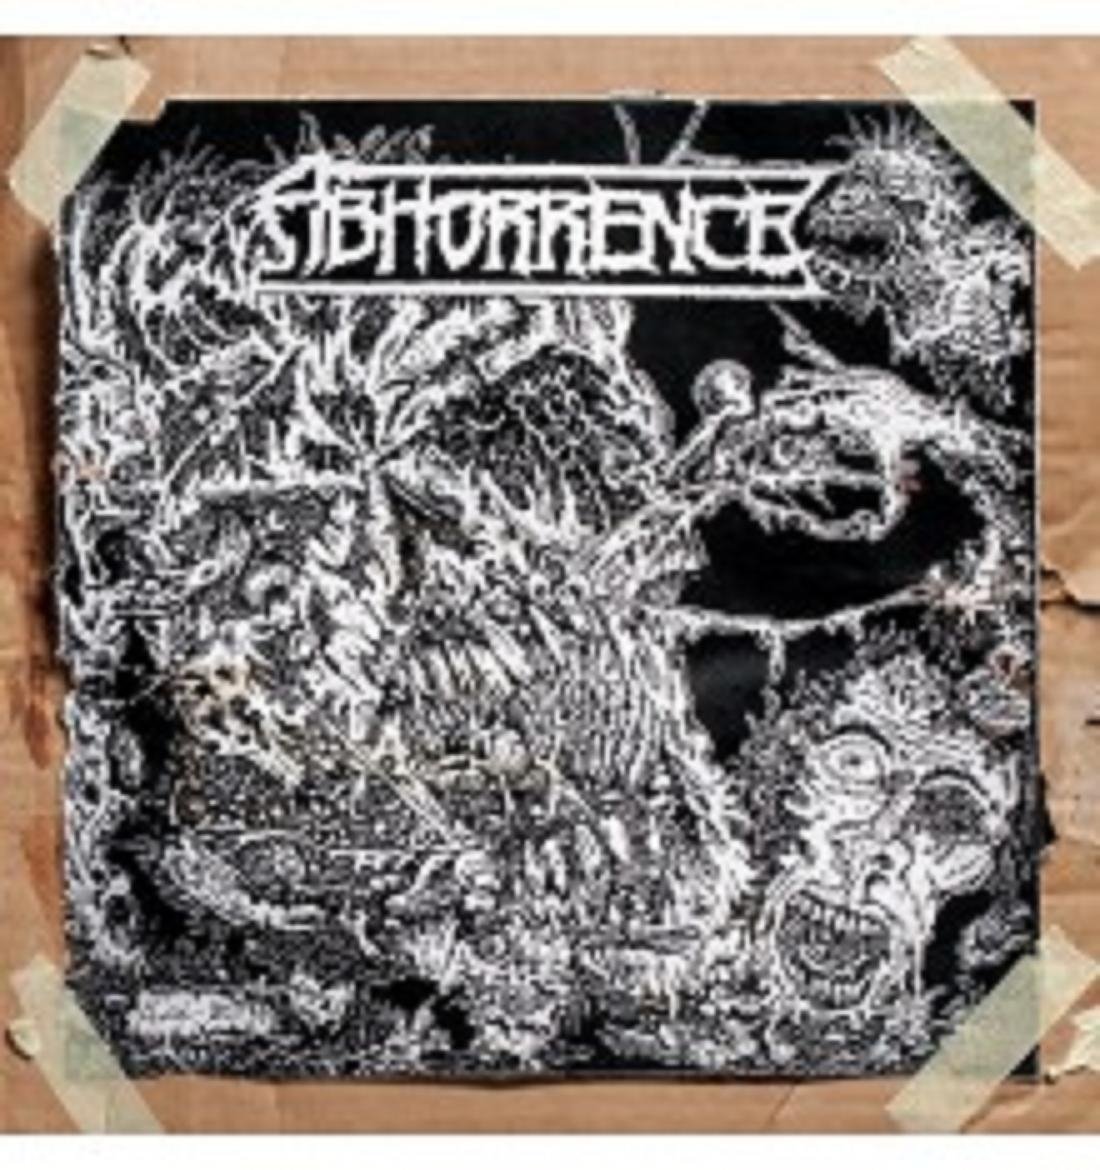 Abhorrence - Completely Vulgar - LP (uusi)